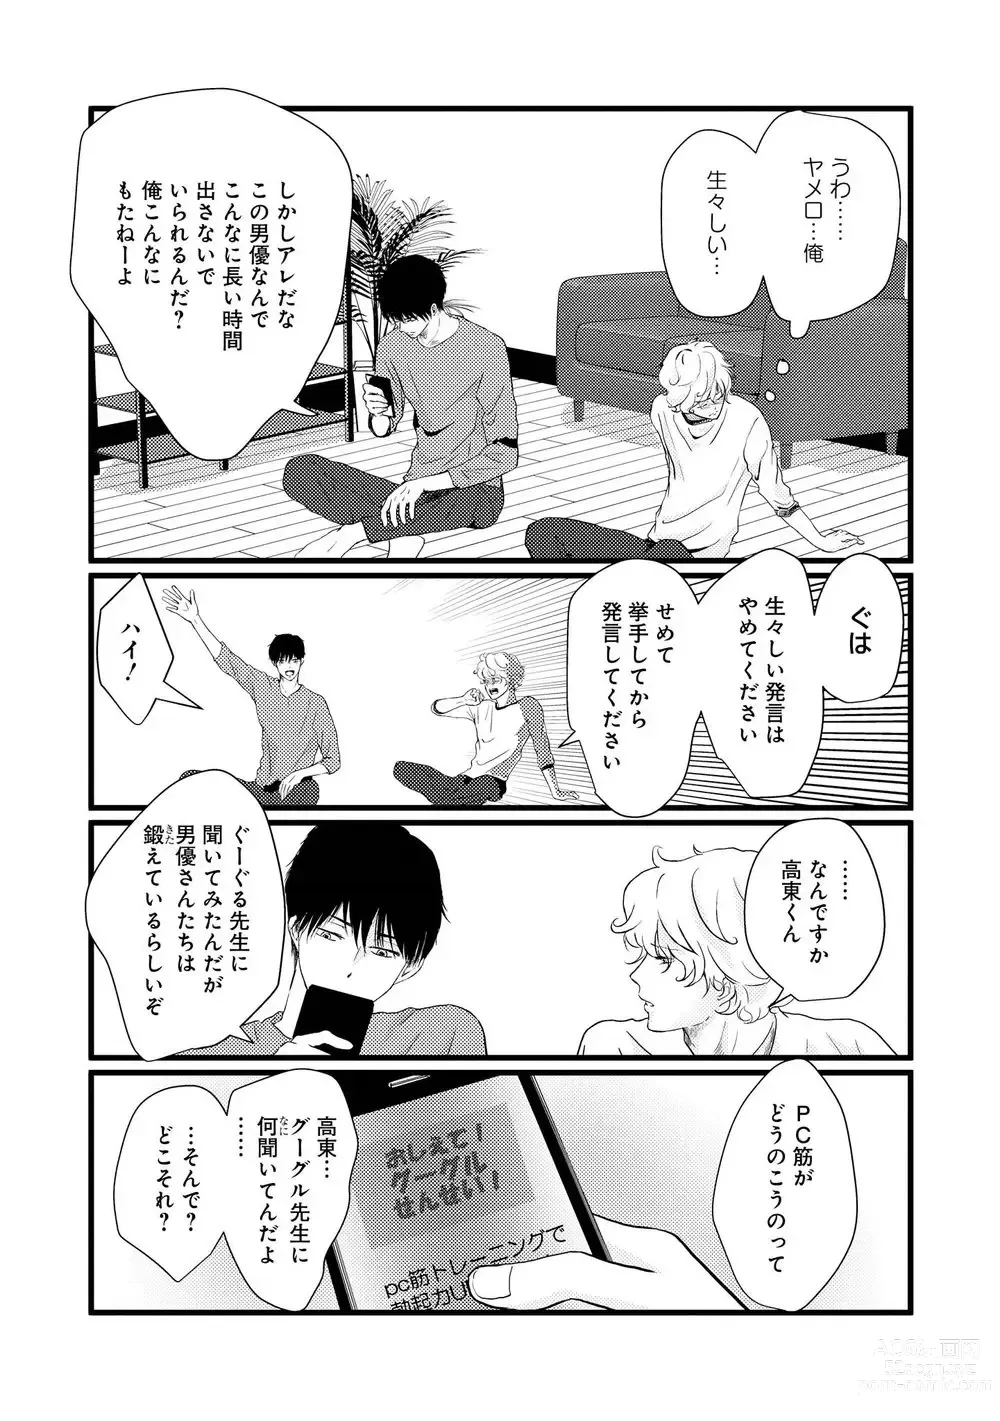 Page 10 of manga AHOERO